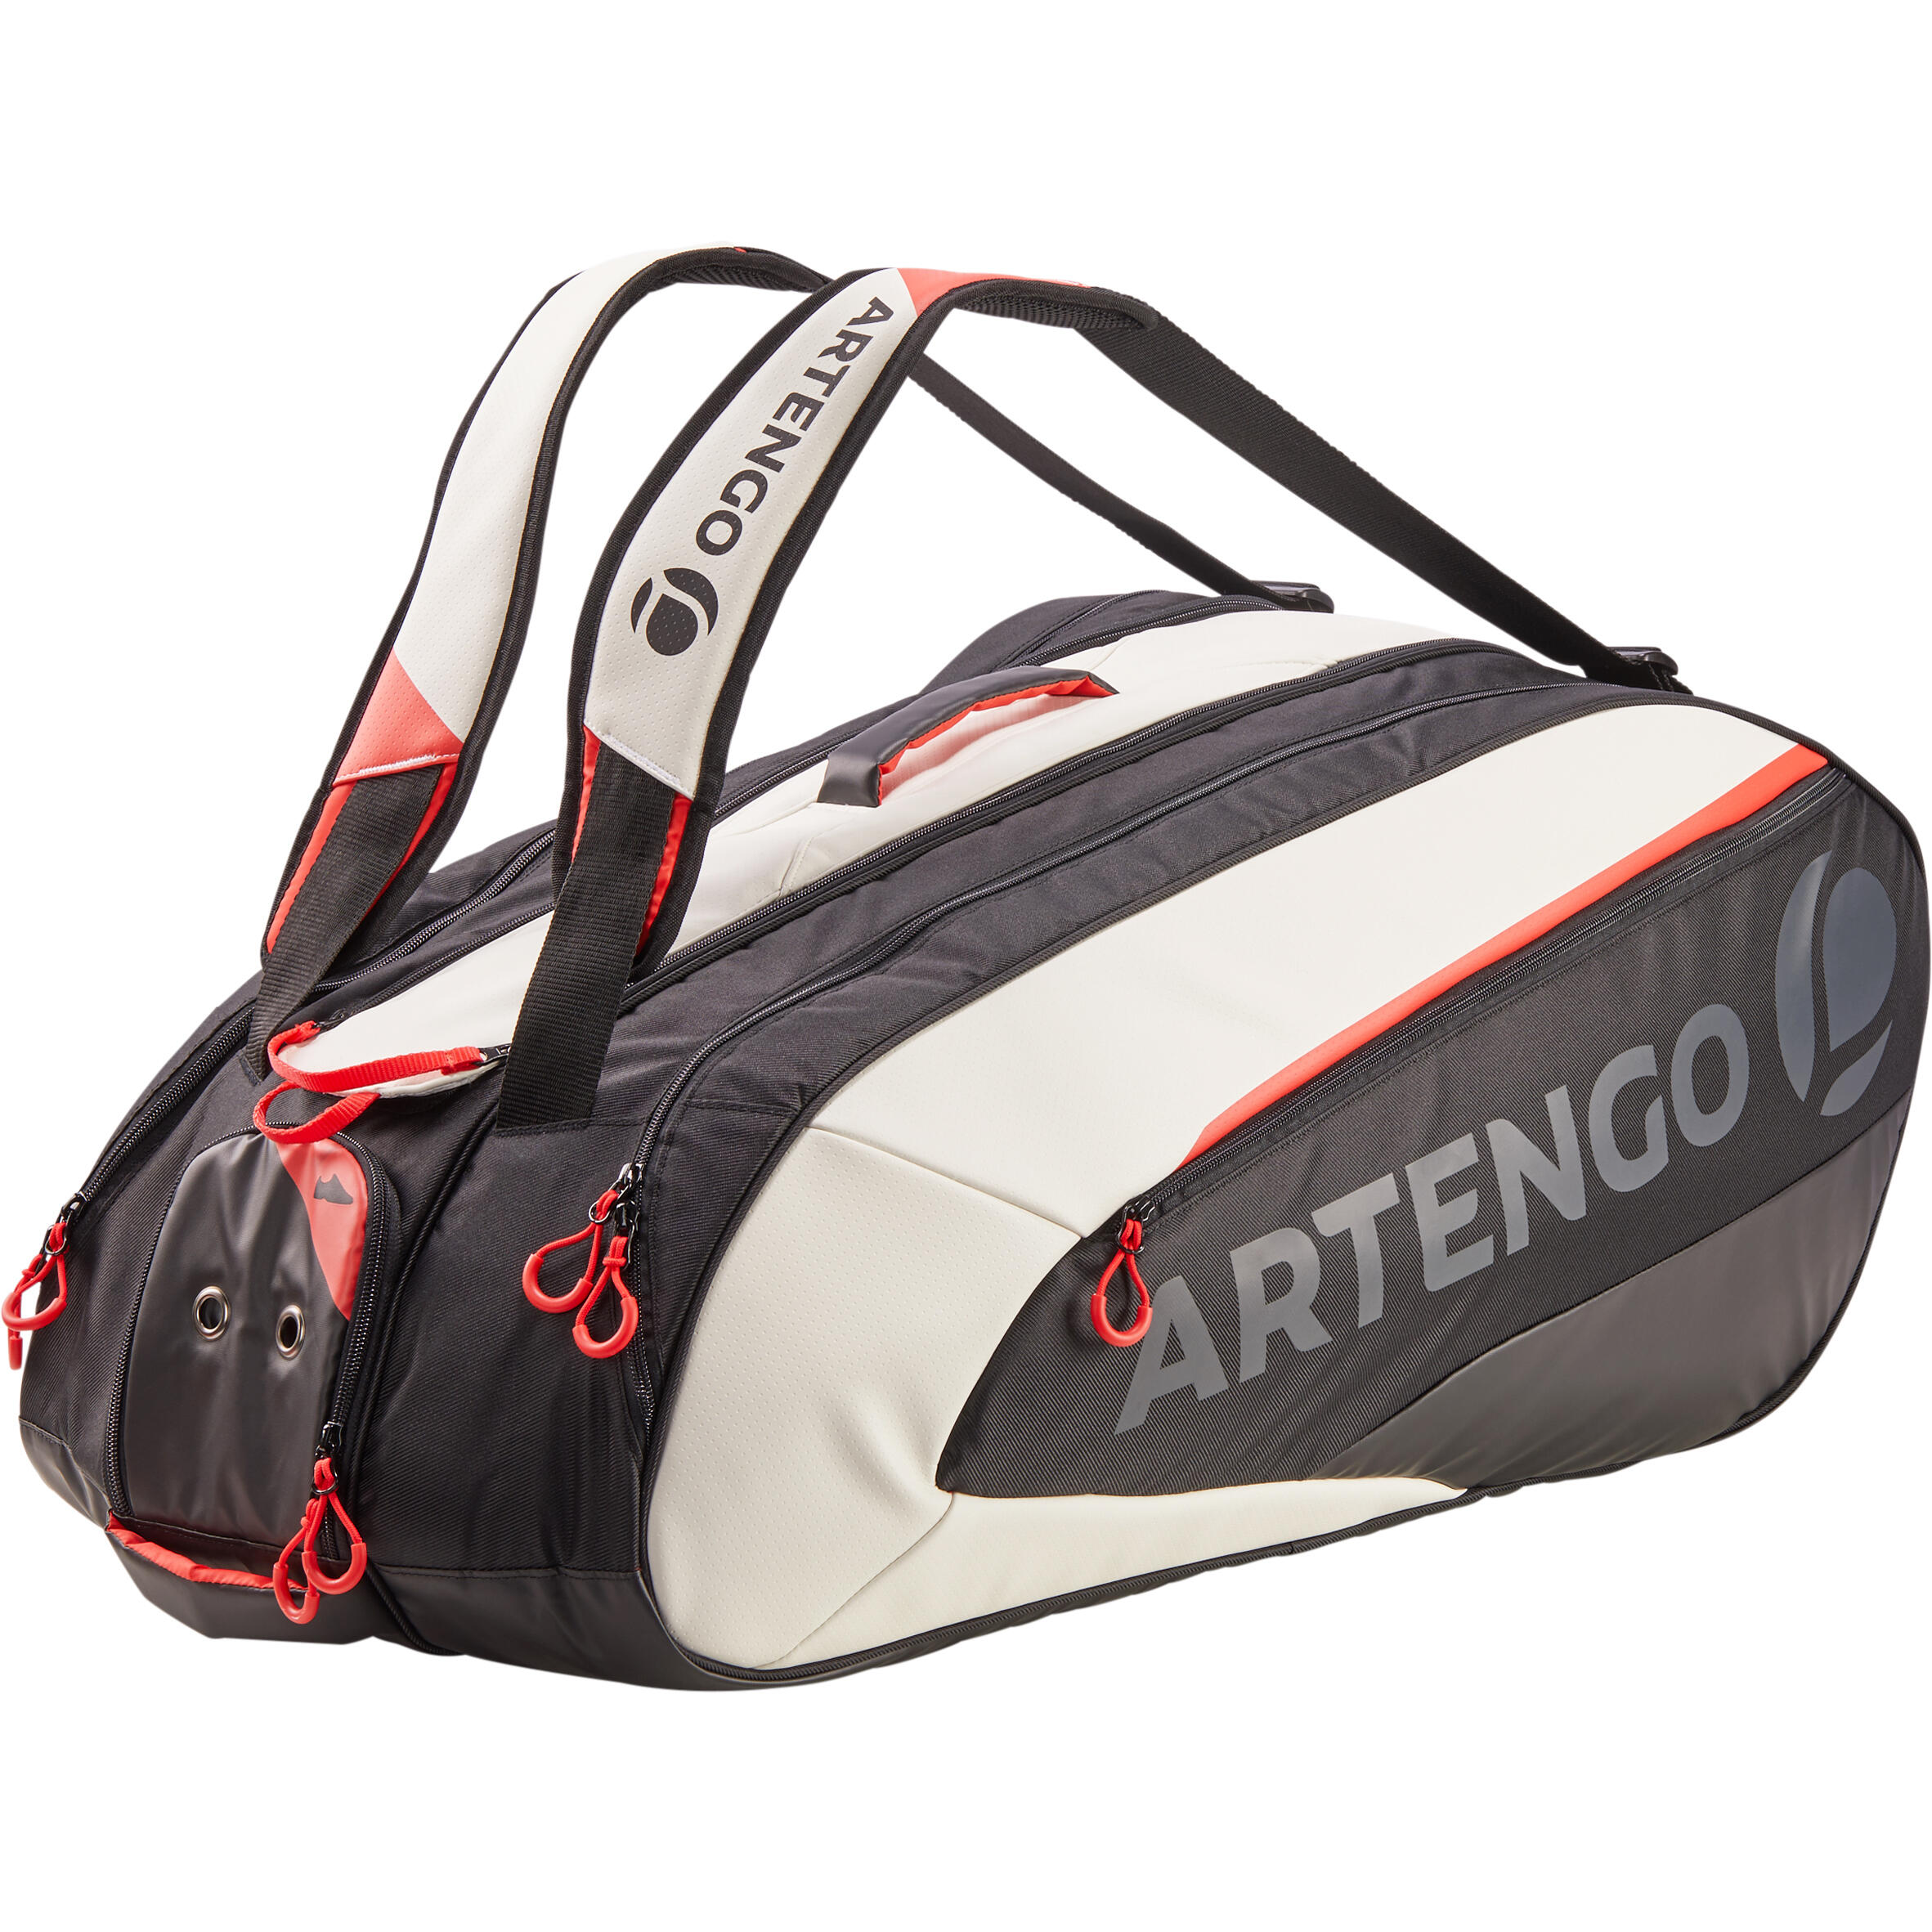 decathlon tennis kit bag